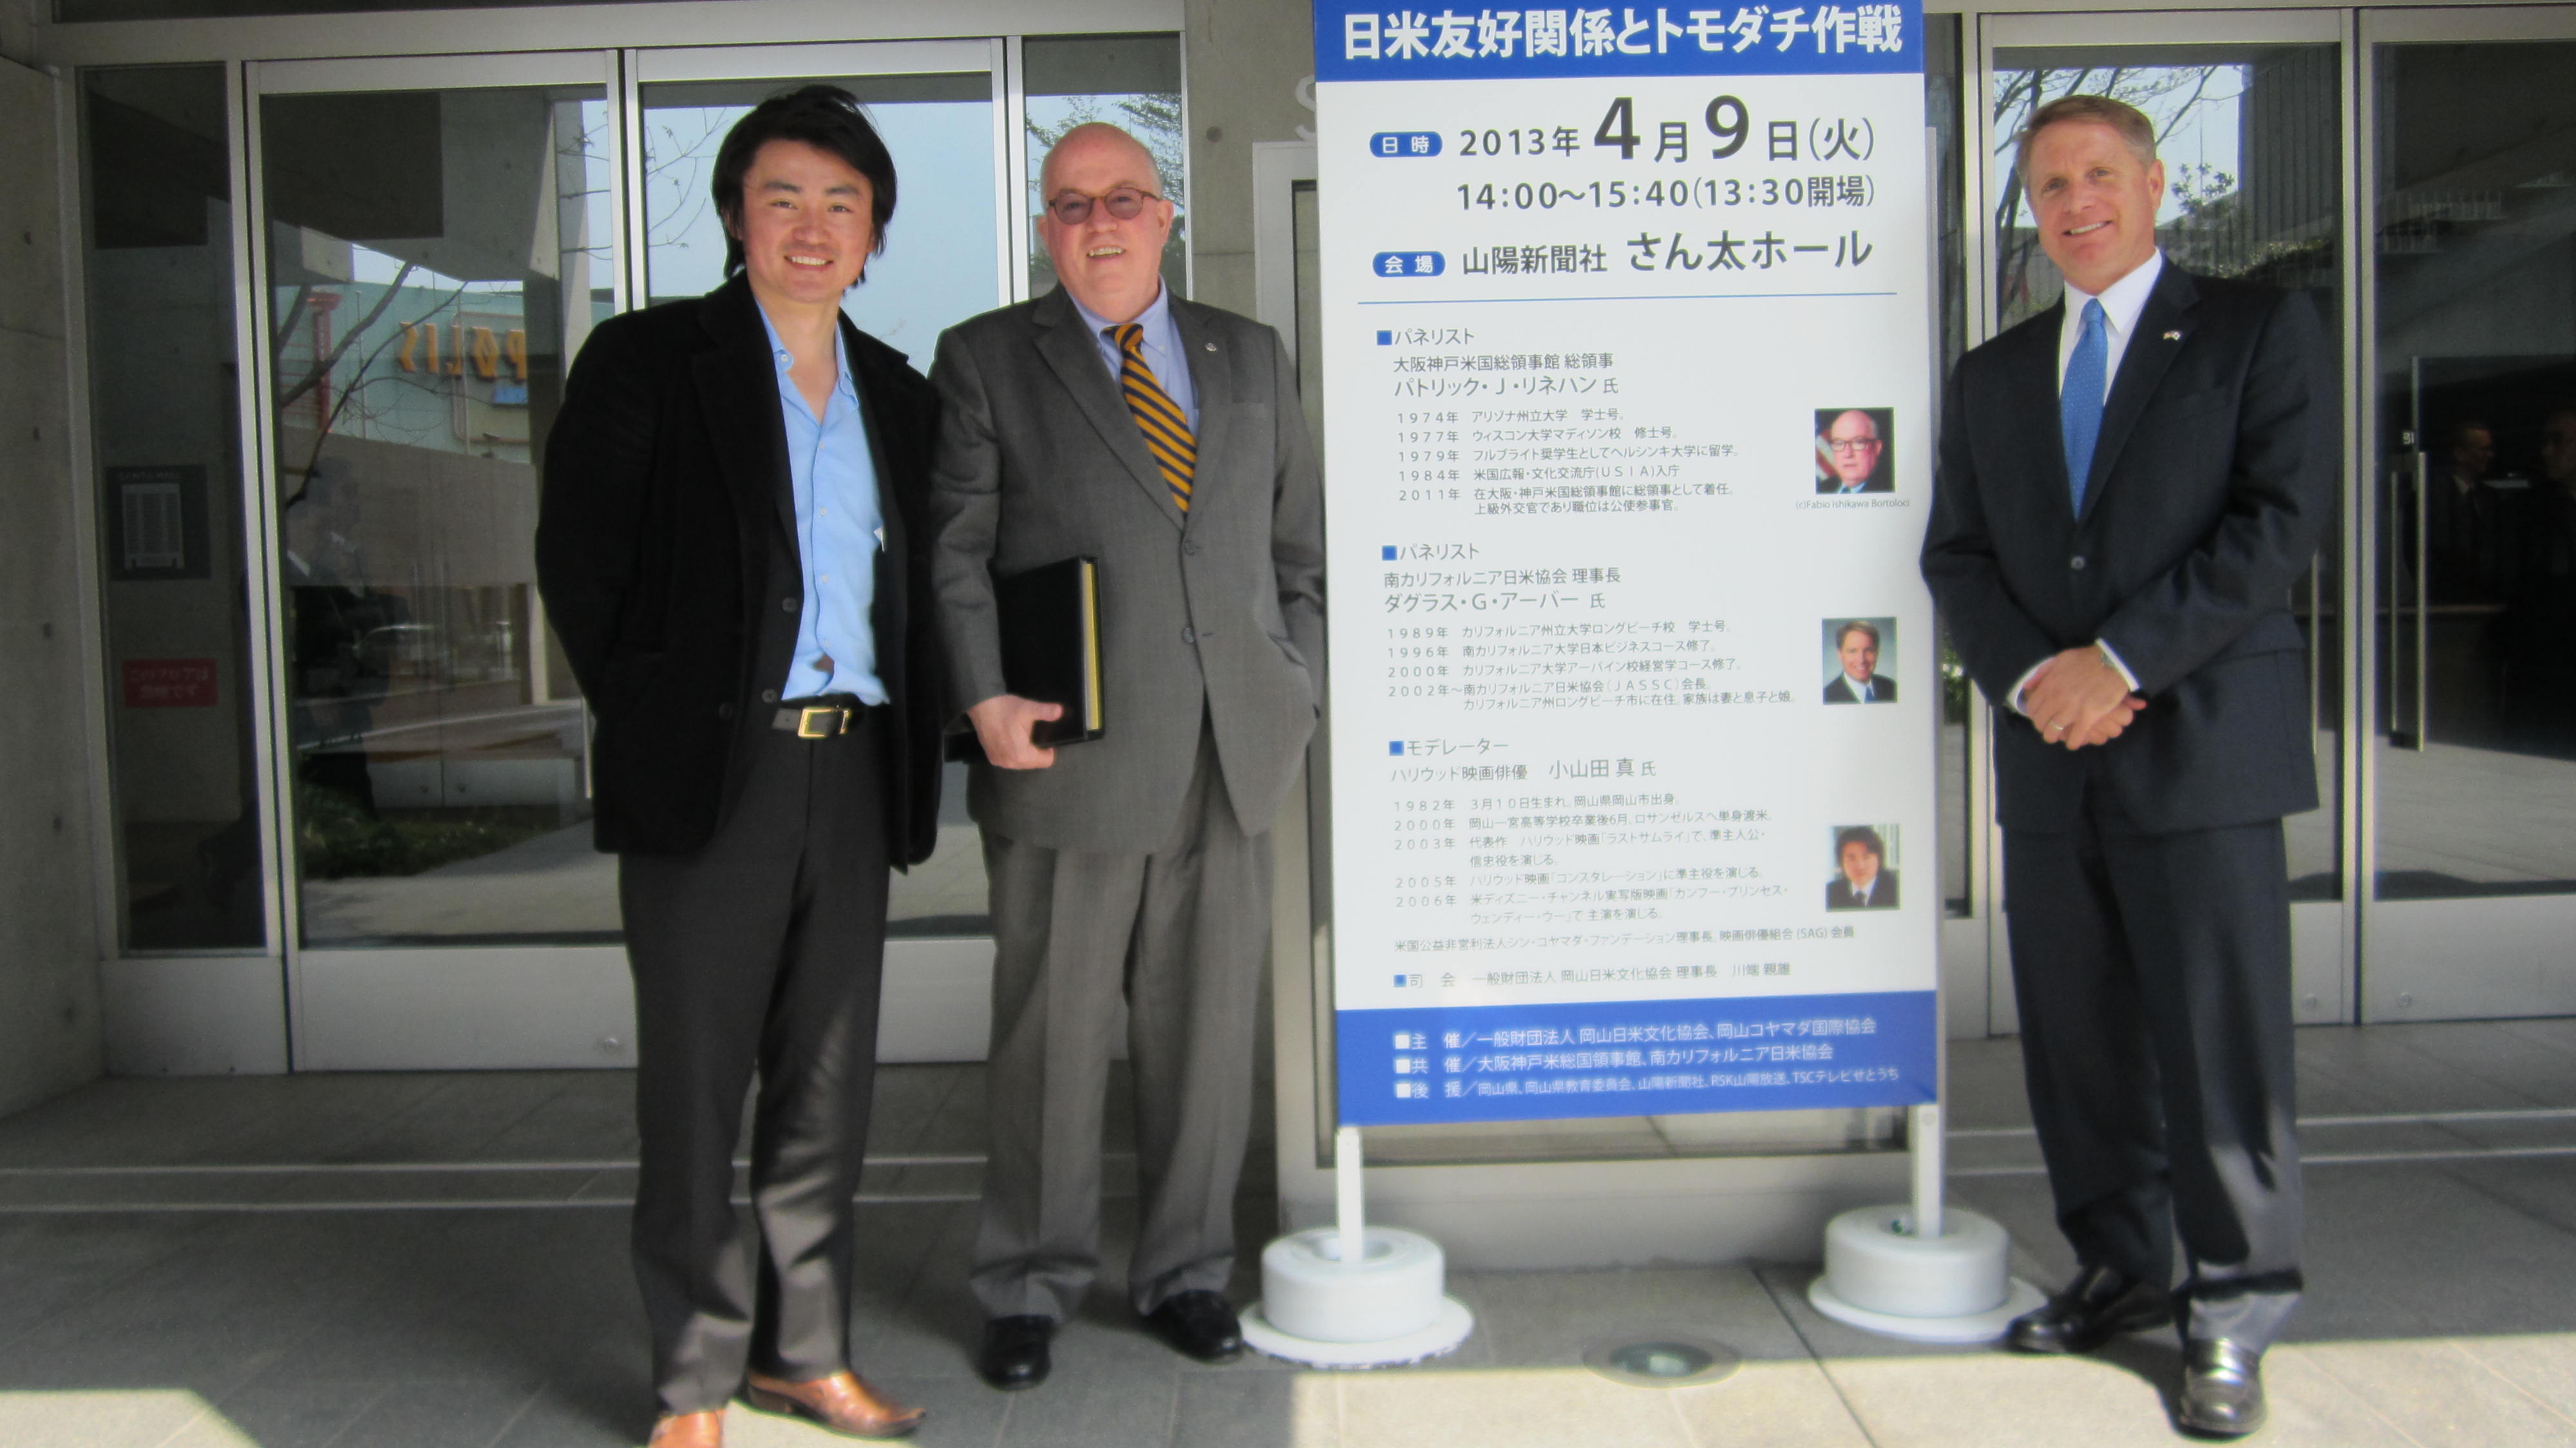 2013/04/09 US-Japan Friendship and Global Youth Leadership Development